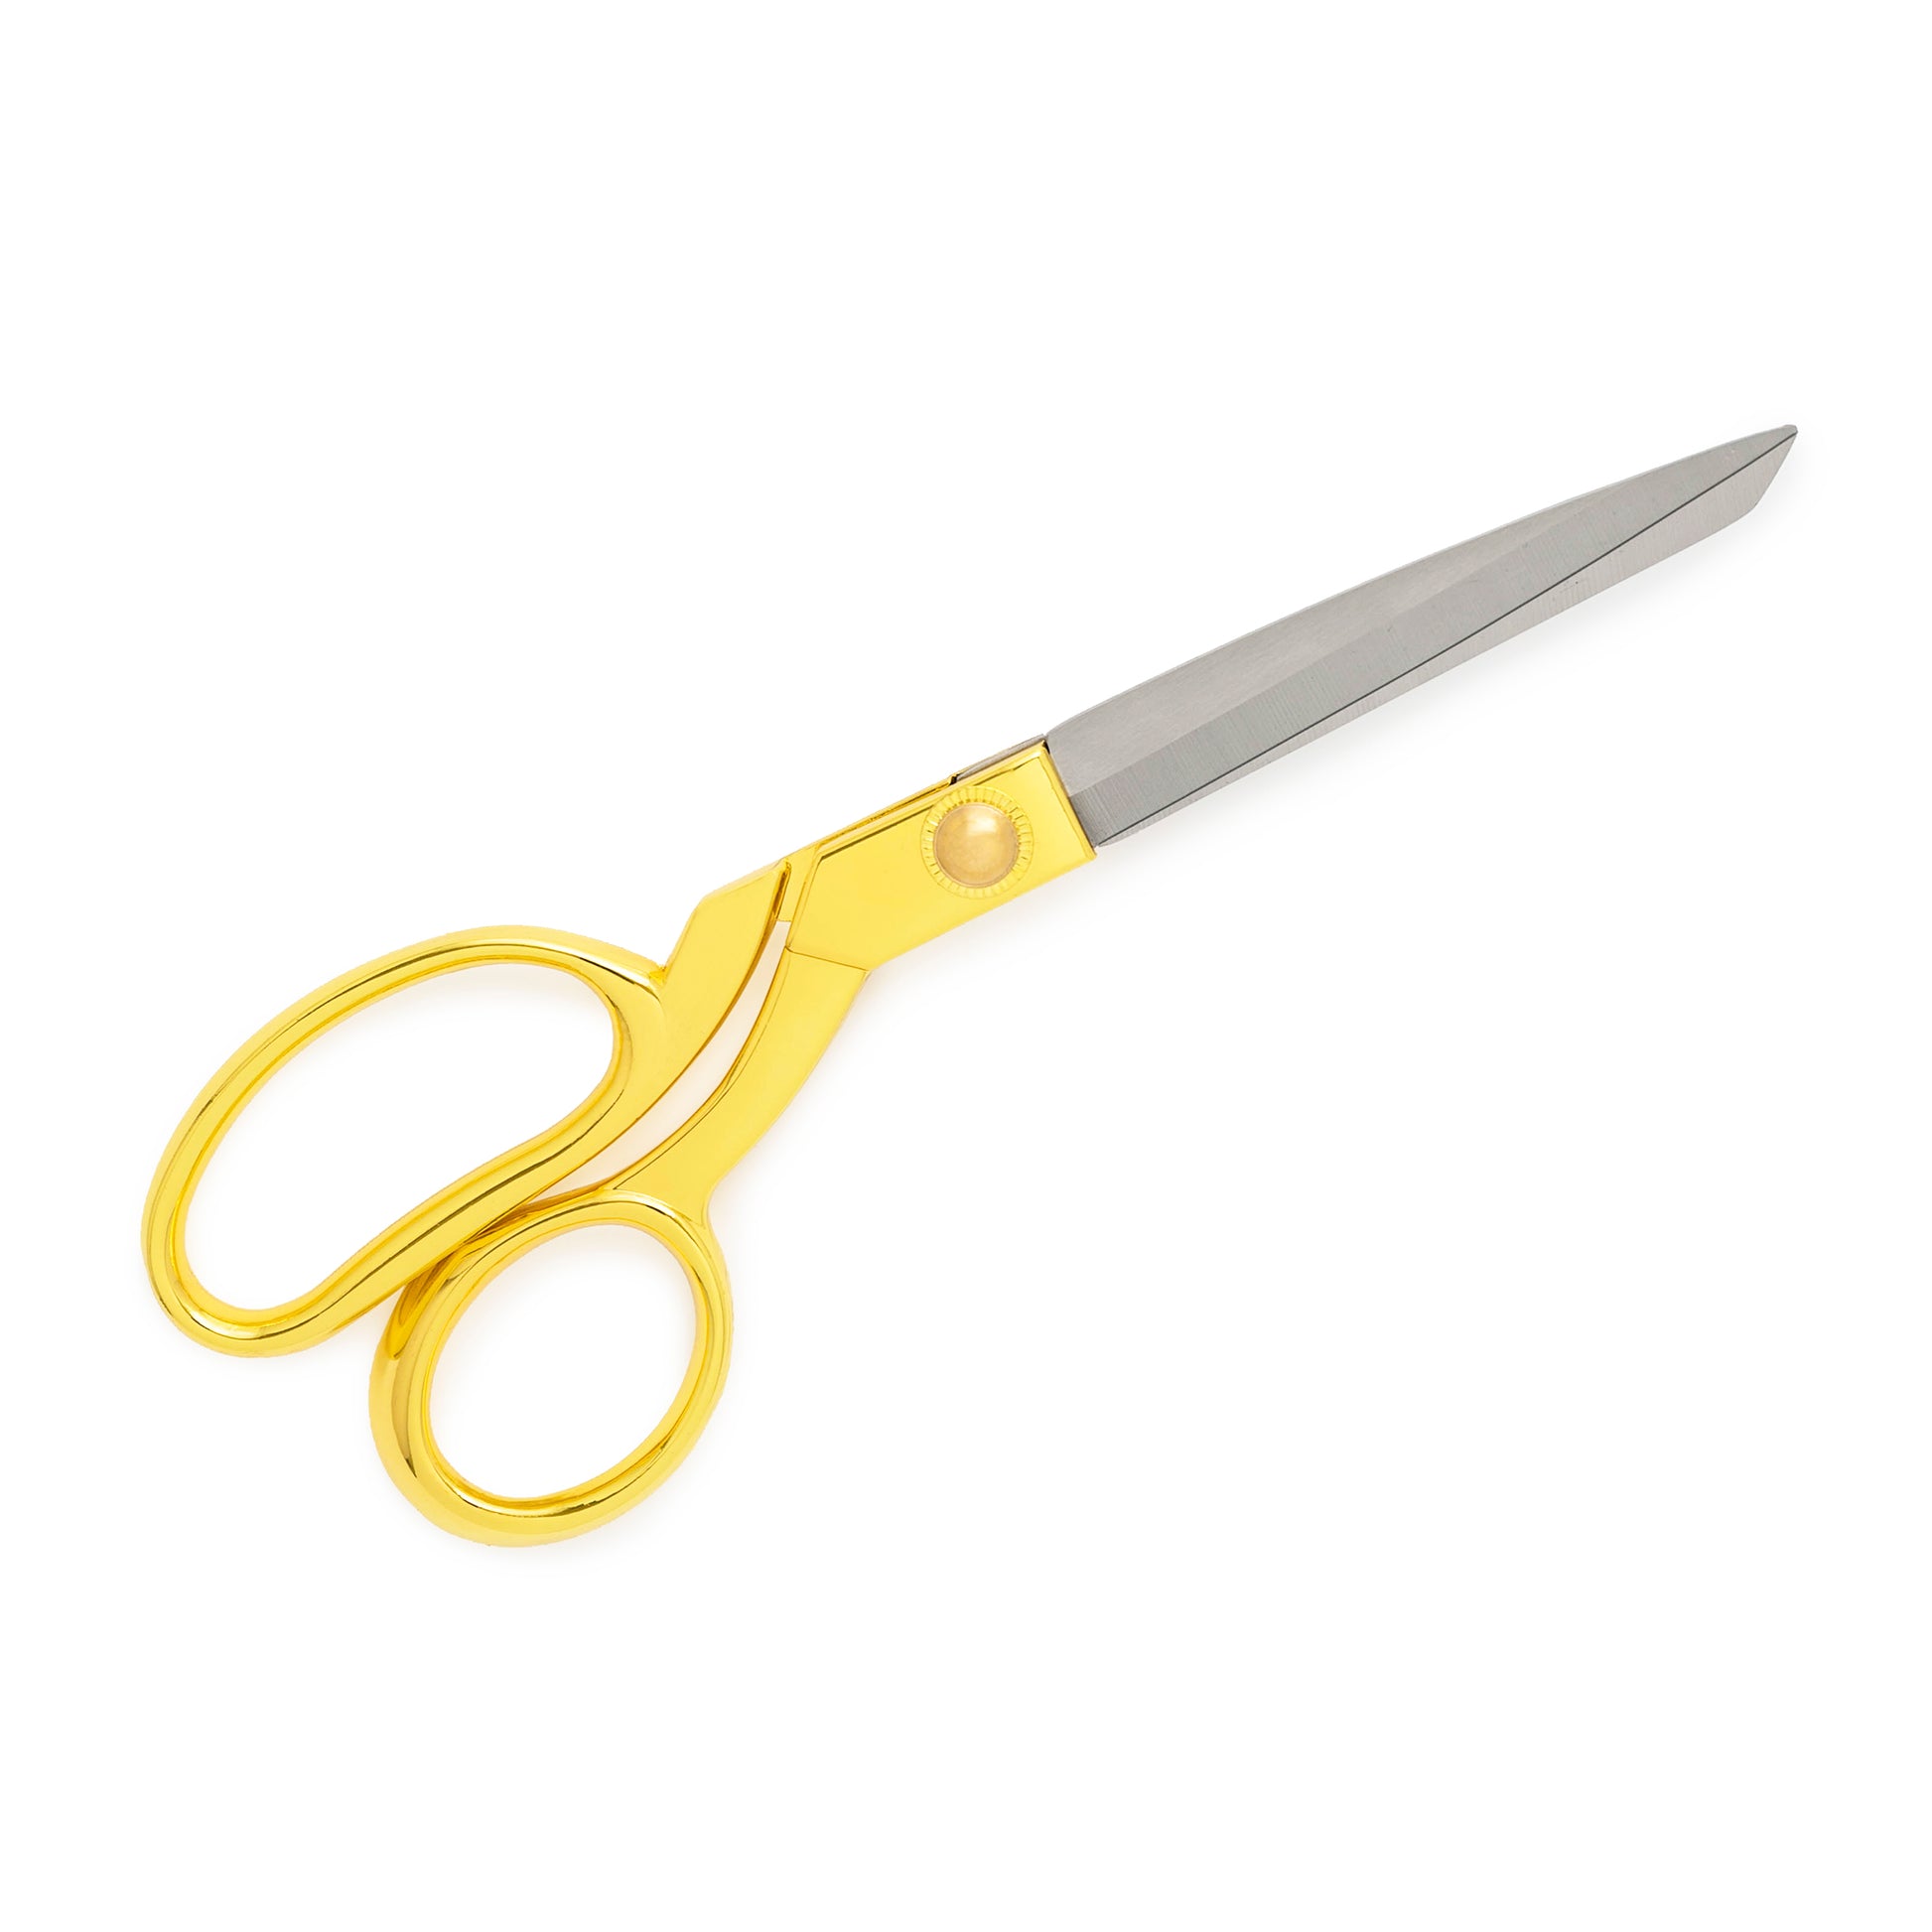 Gold handled scissors